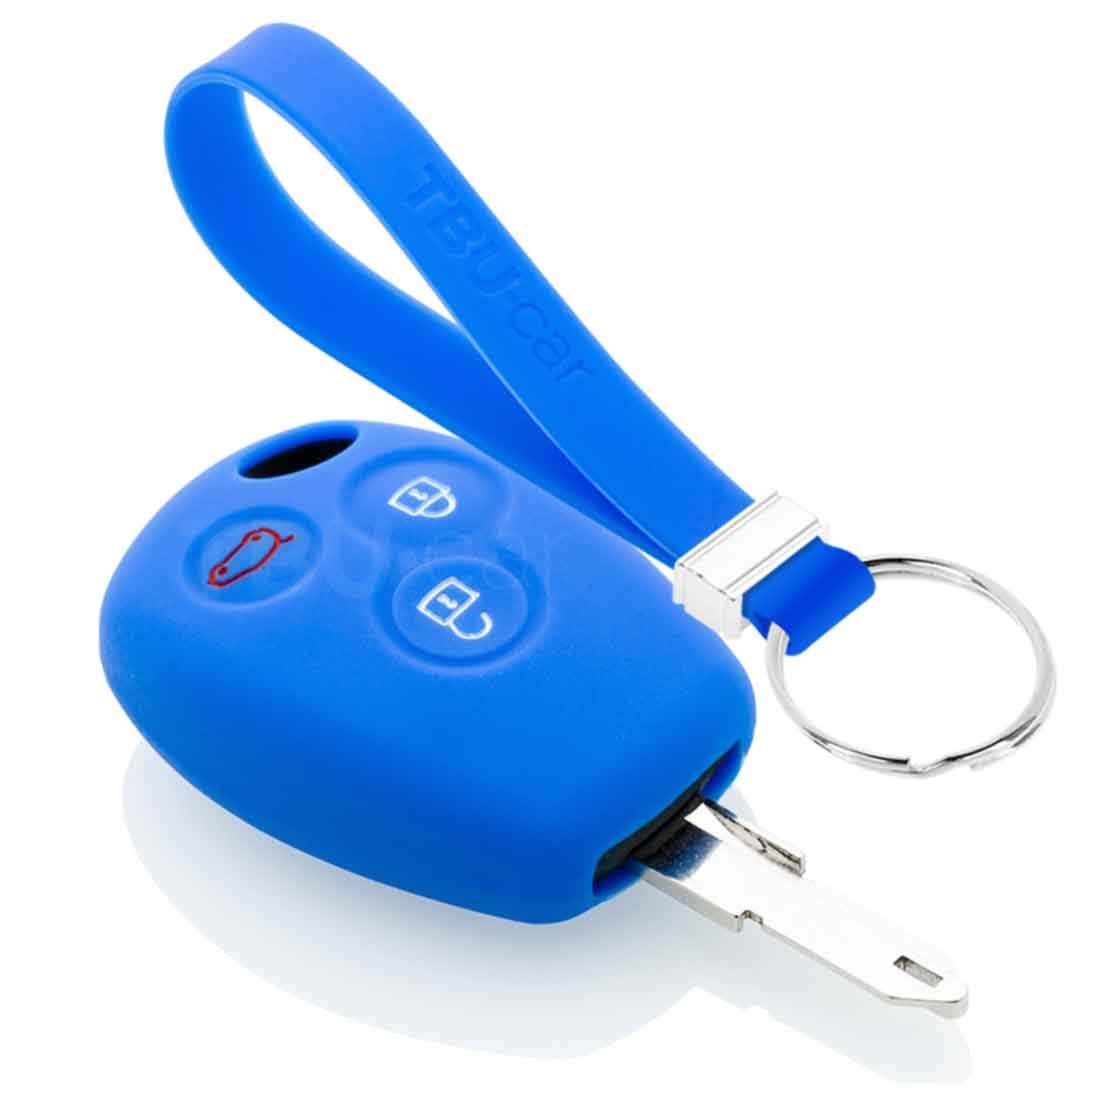 TBU car TBU car Autoschlüssel Hülle kompatibel mit Dacia 3 Tasten - Schutzhülle aus Silikon - Auto Schlüsselhülle Cover in Blau